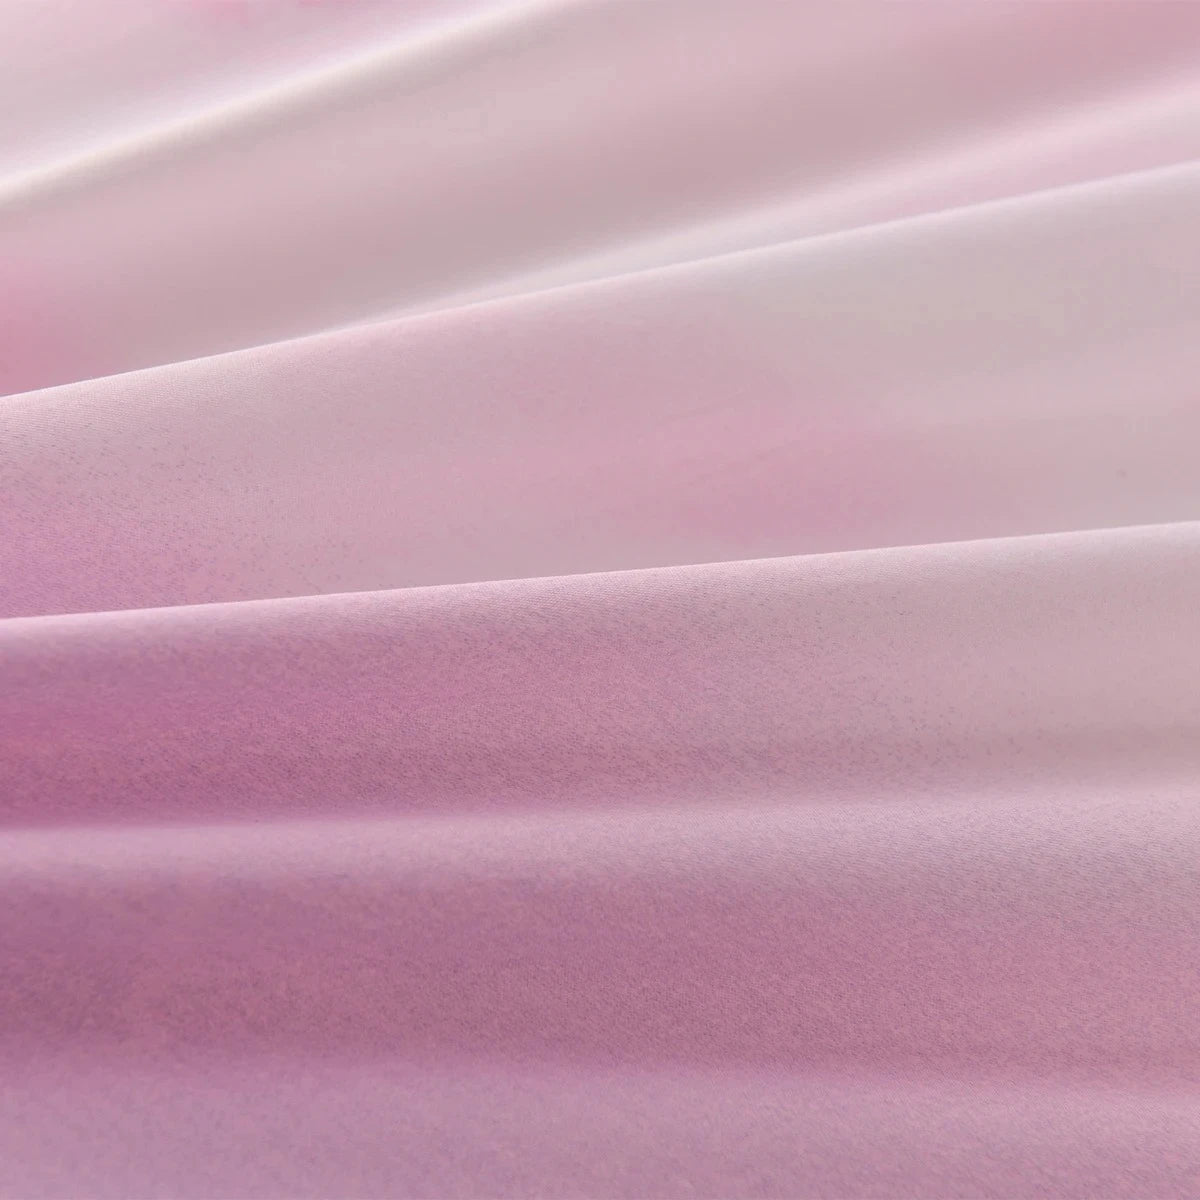 Design details of a Pink and Purple Bedding set